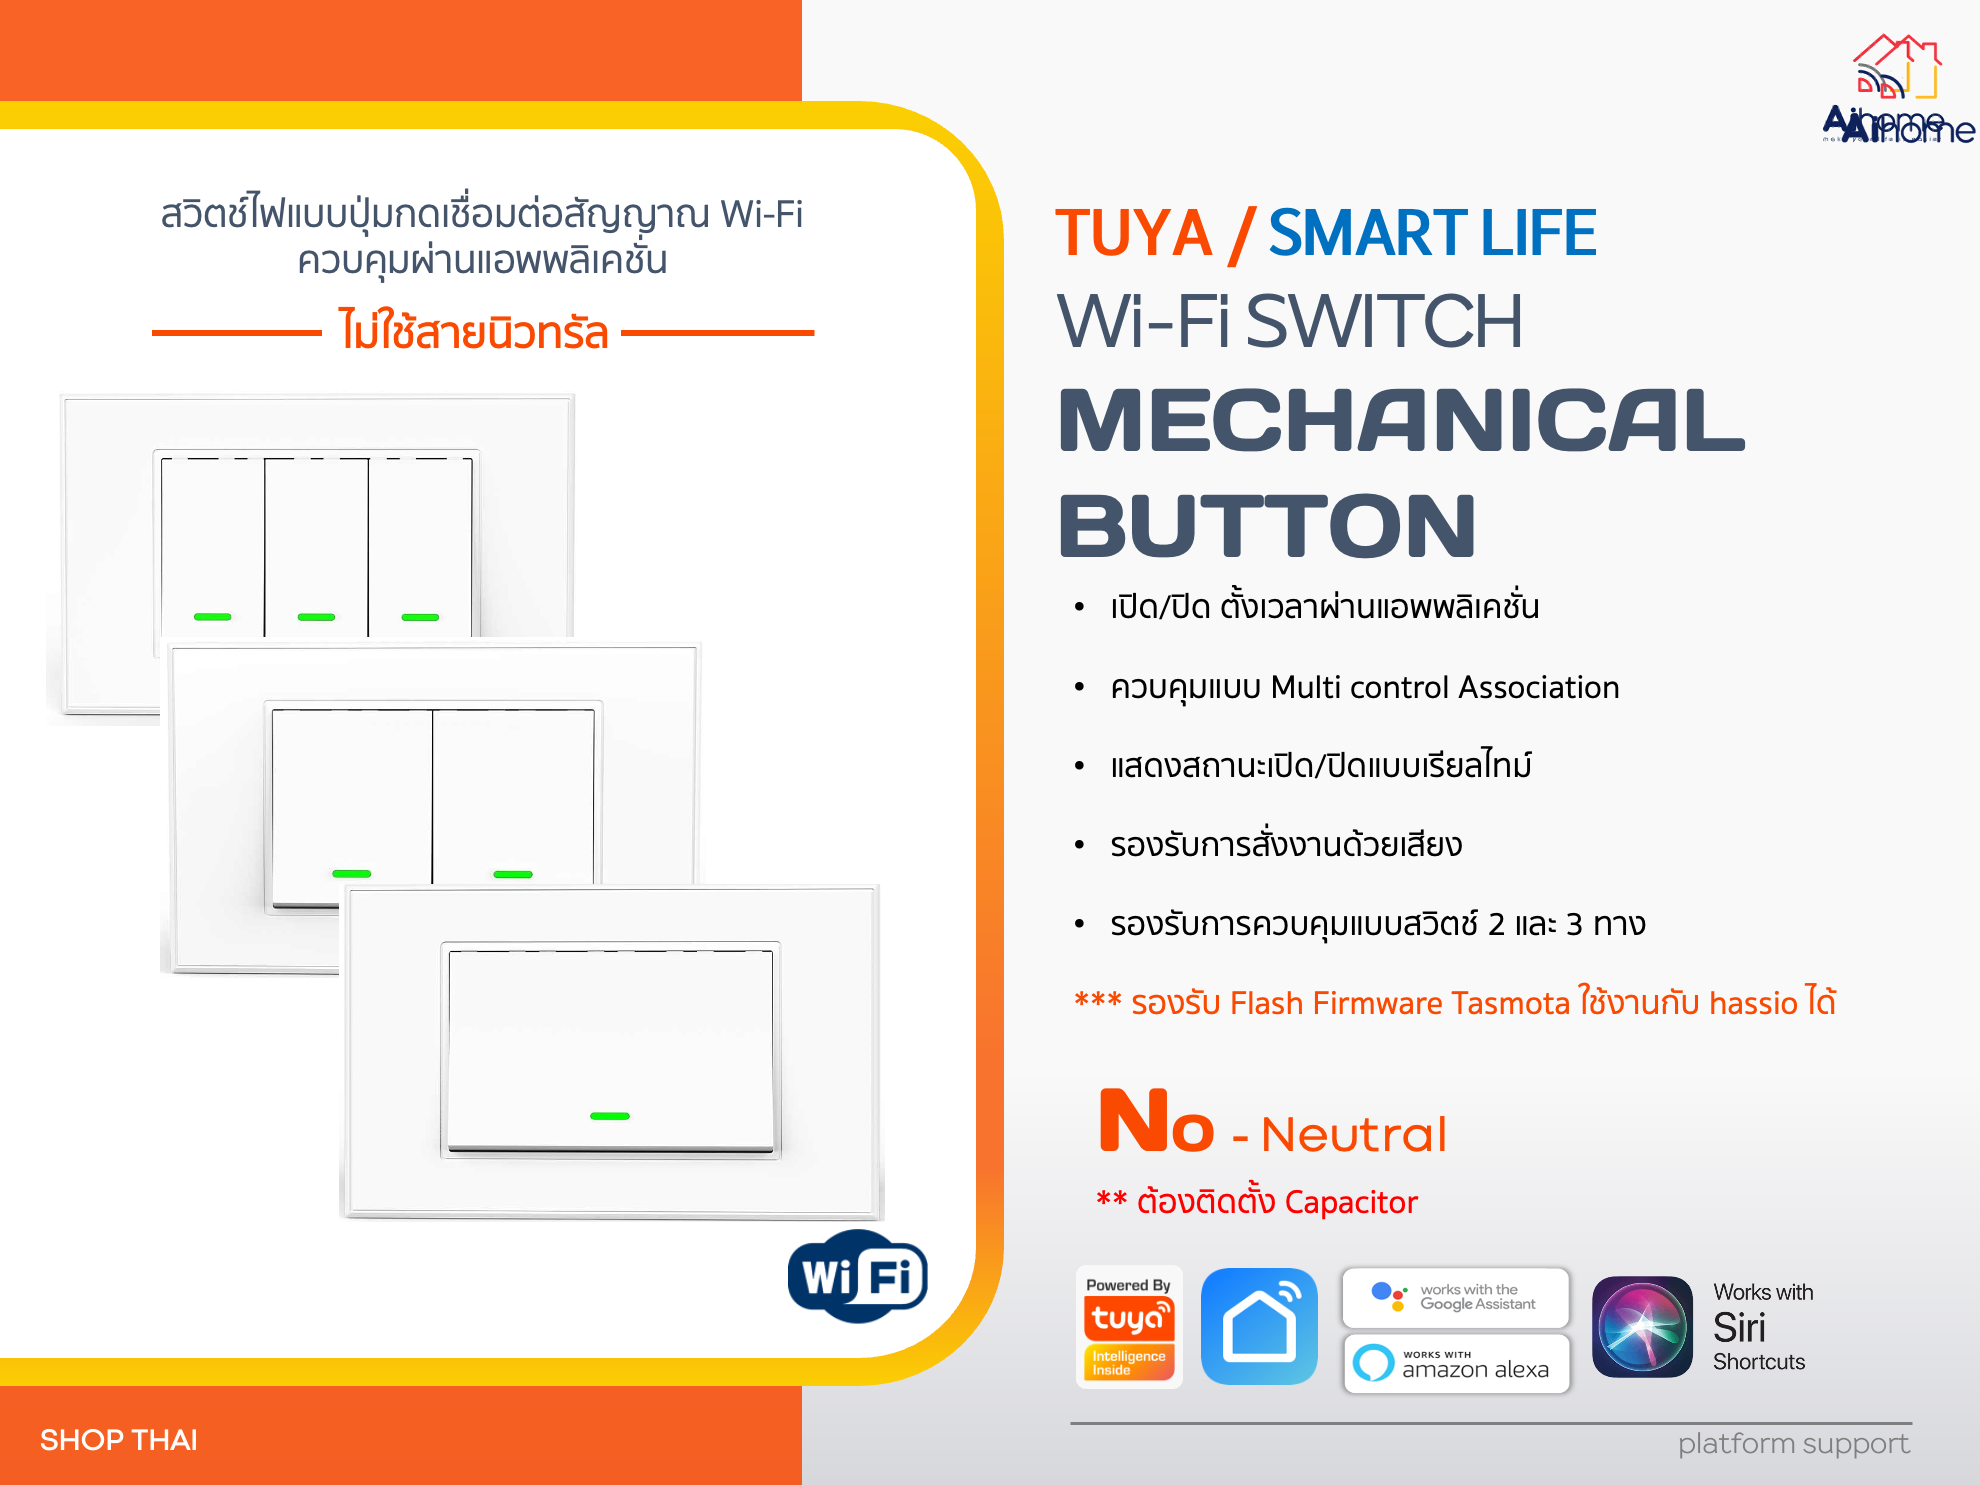 Tuya Wi-Fi Smart Switch Mechanical Button - No Neutral สวิตช์ไฟ Wi-Fi แบบปุ่มกด ไม่ใช้สาย N (1/2/3 ปุ่ม)ควบคุมผ่านแอพพลิเคชั่น